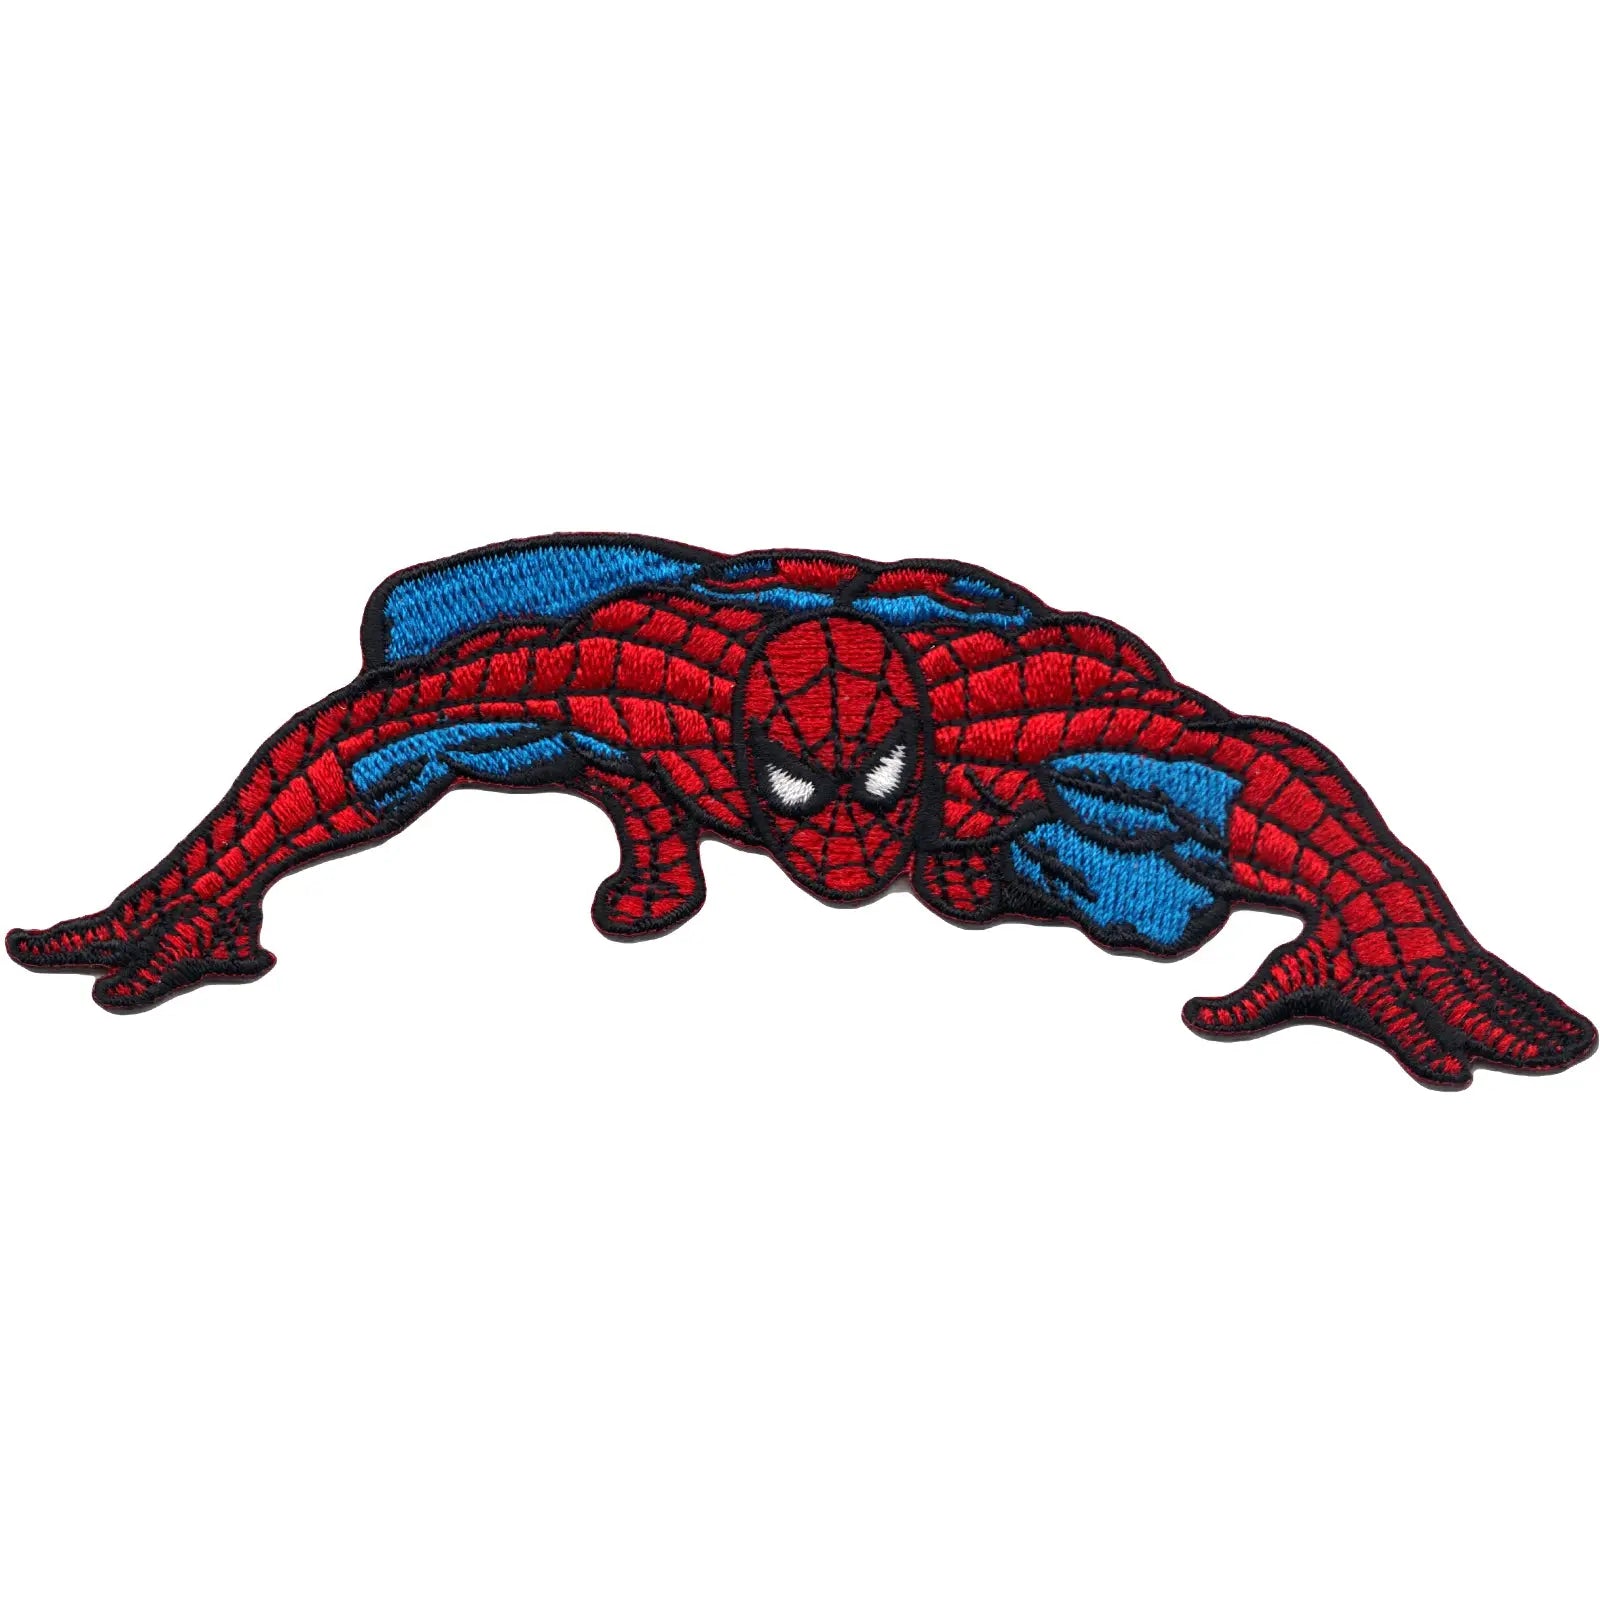 Spider-Man Logo Iron on Patch